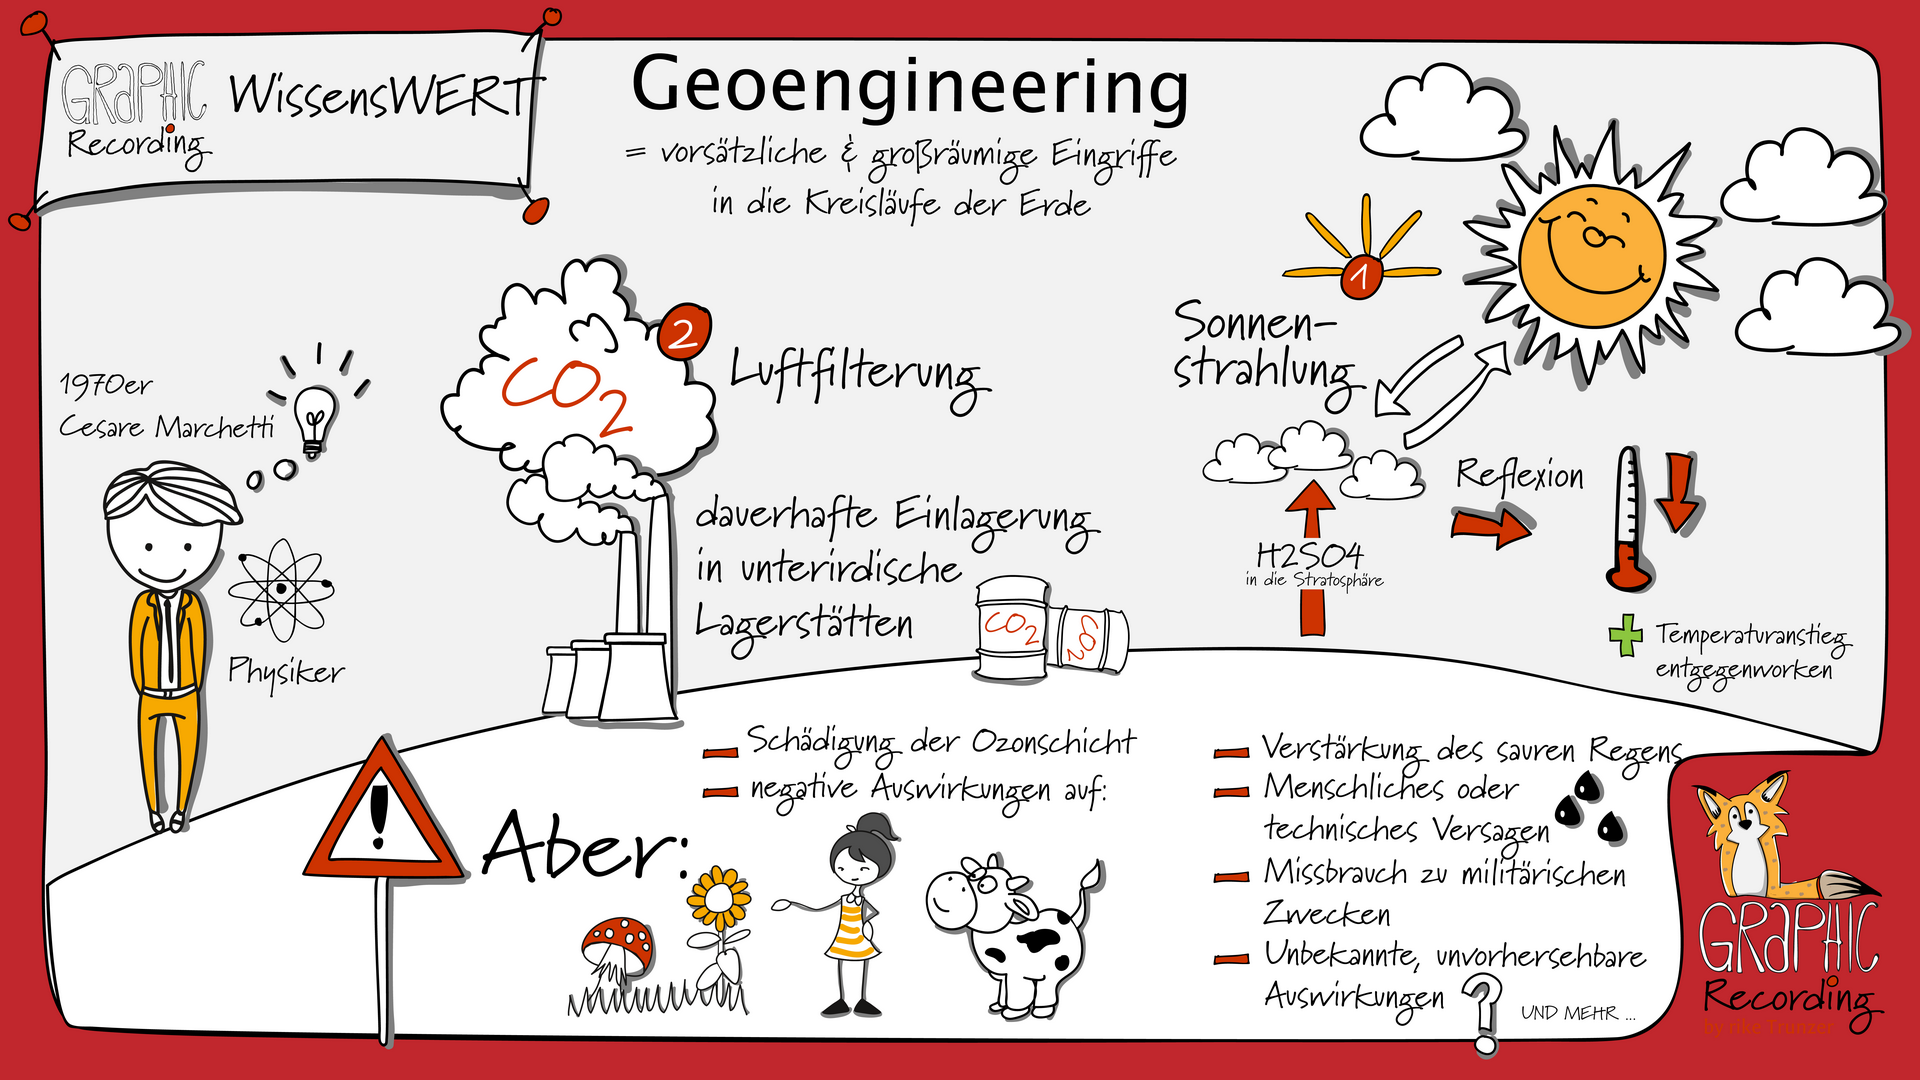 Graphic recording: Geoengeneering